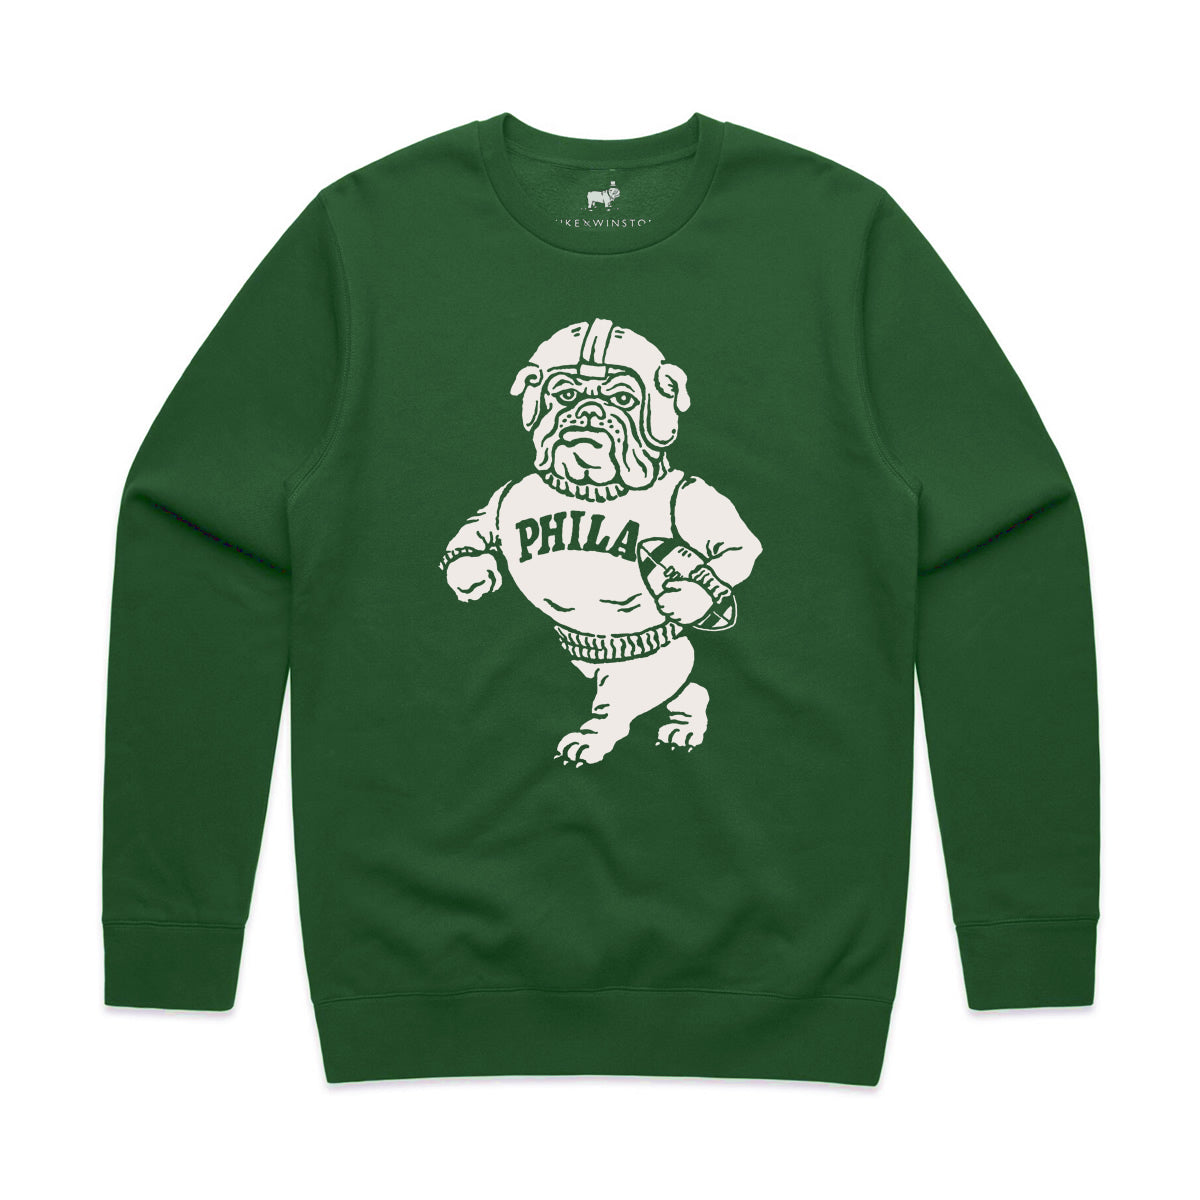 & – Philadelphia Winston Green) Sweatshirt (Kelly Bulldogs Duke